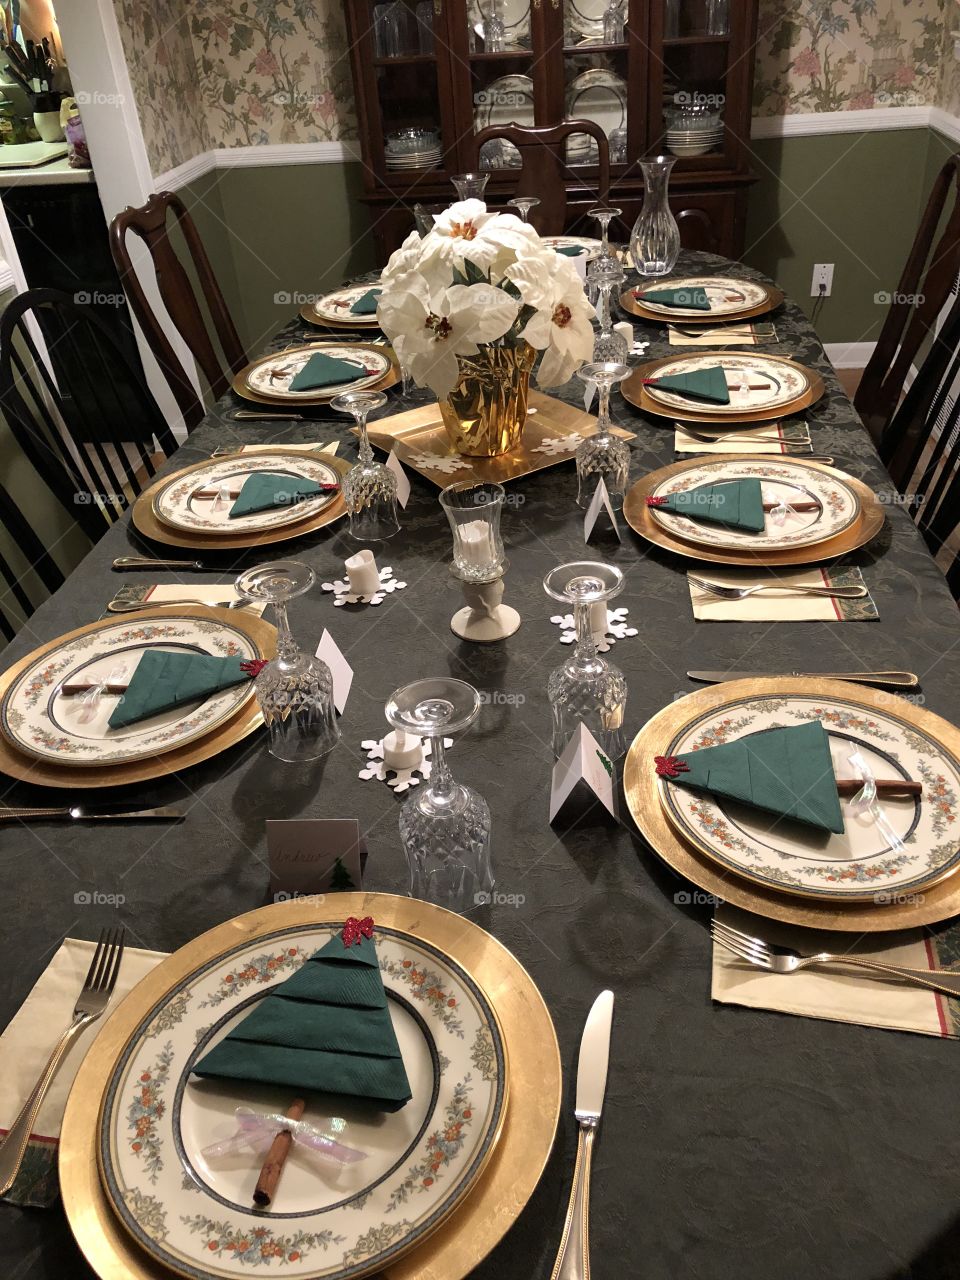 Christmas dinner table